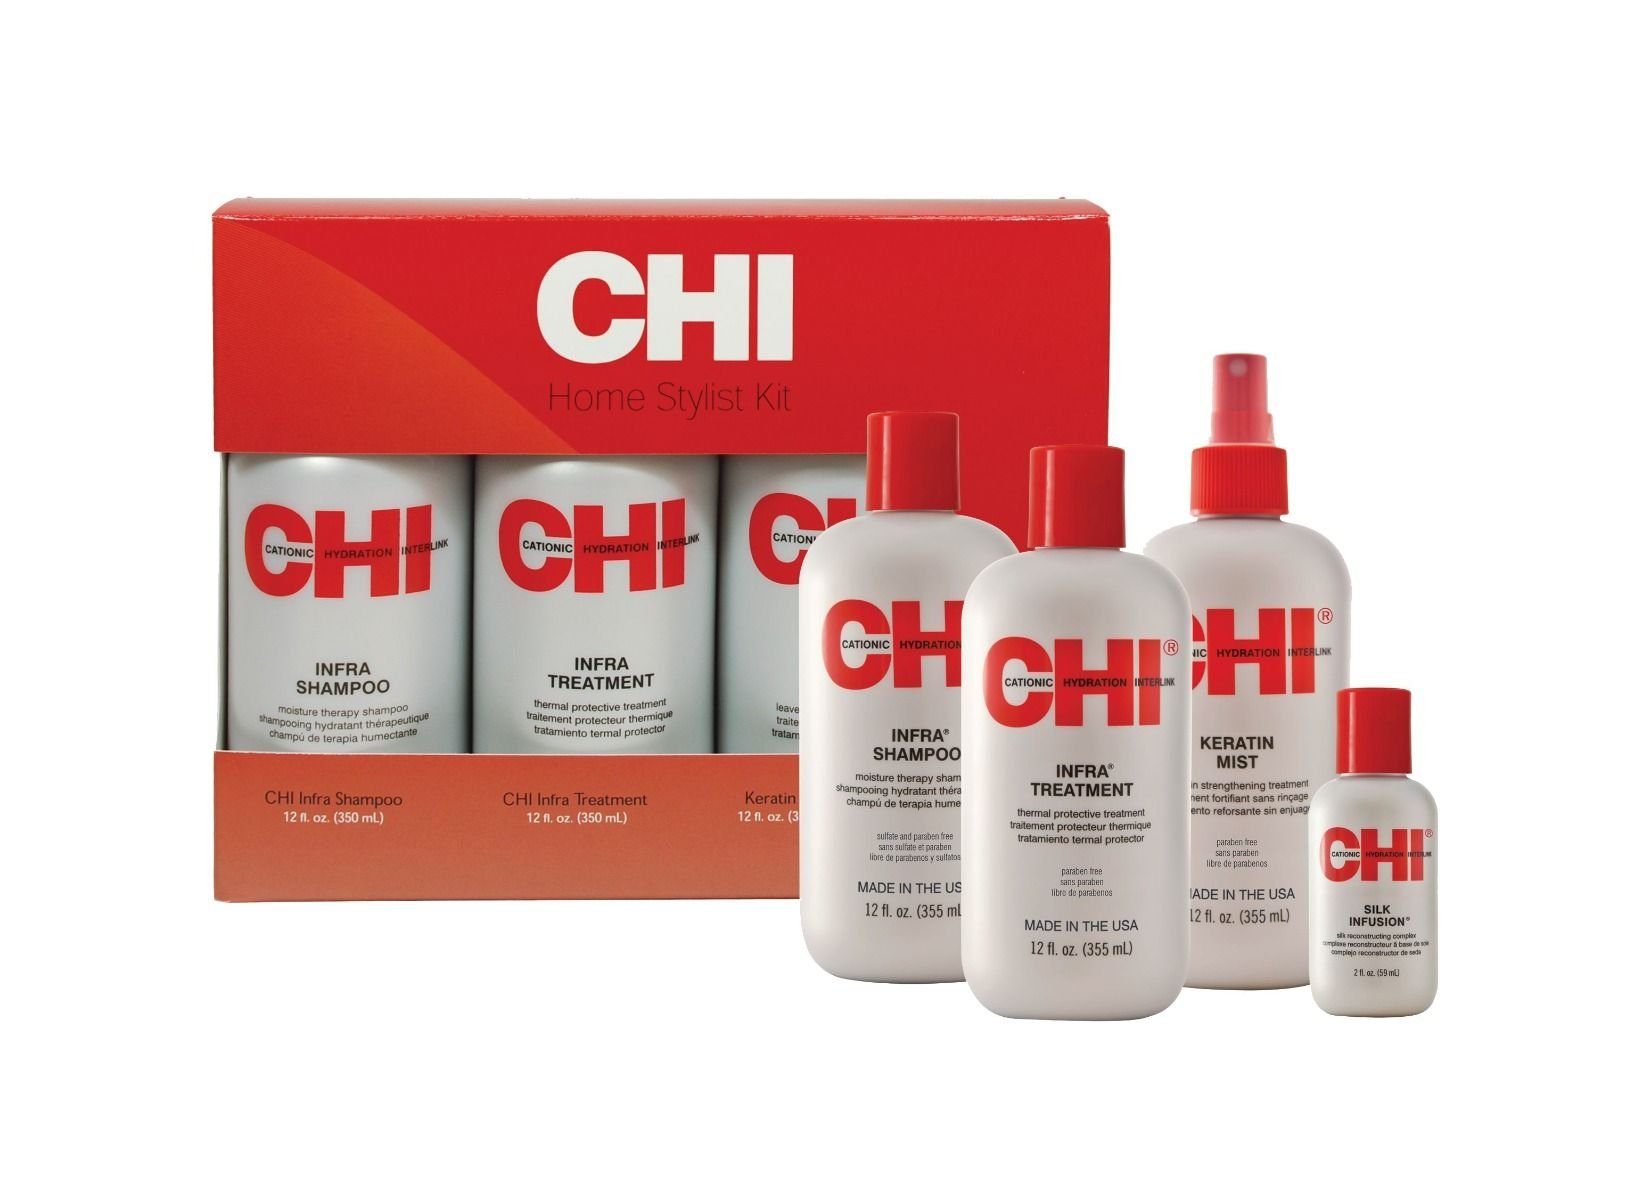 CHI Haarpflege-Set CHI Infra Home Stylist Kit, Haarpflege-Set